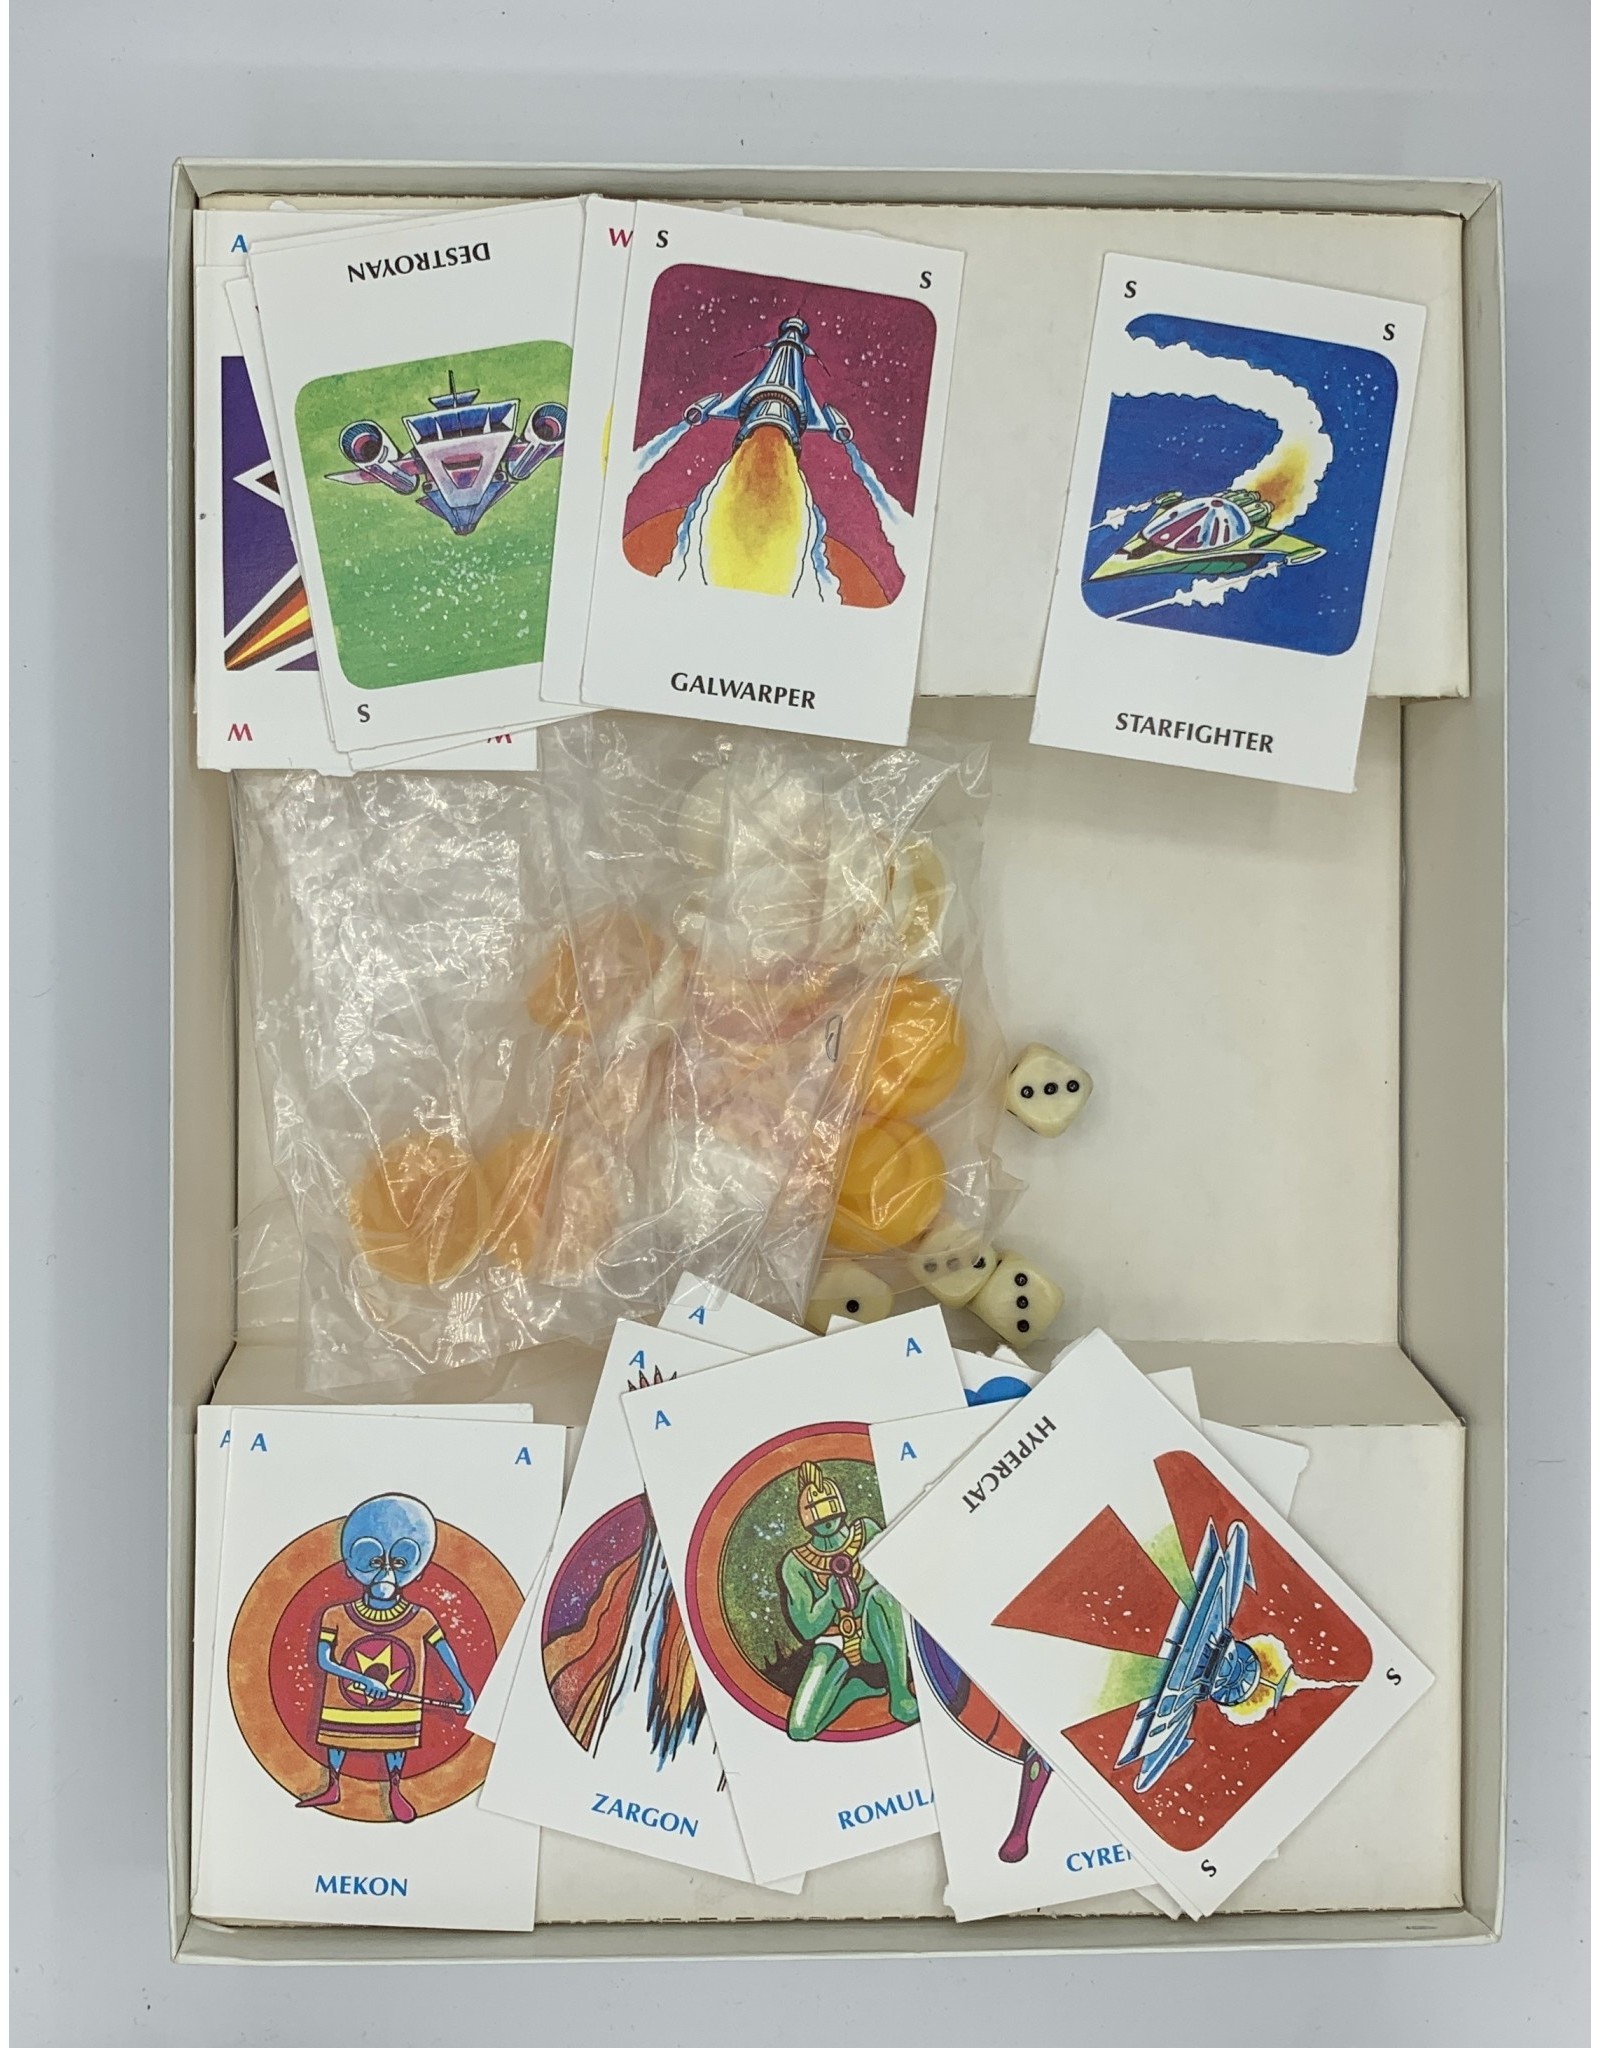 Gamma Two Games Starlord Board Game (1977)